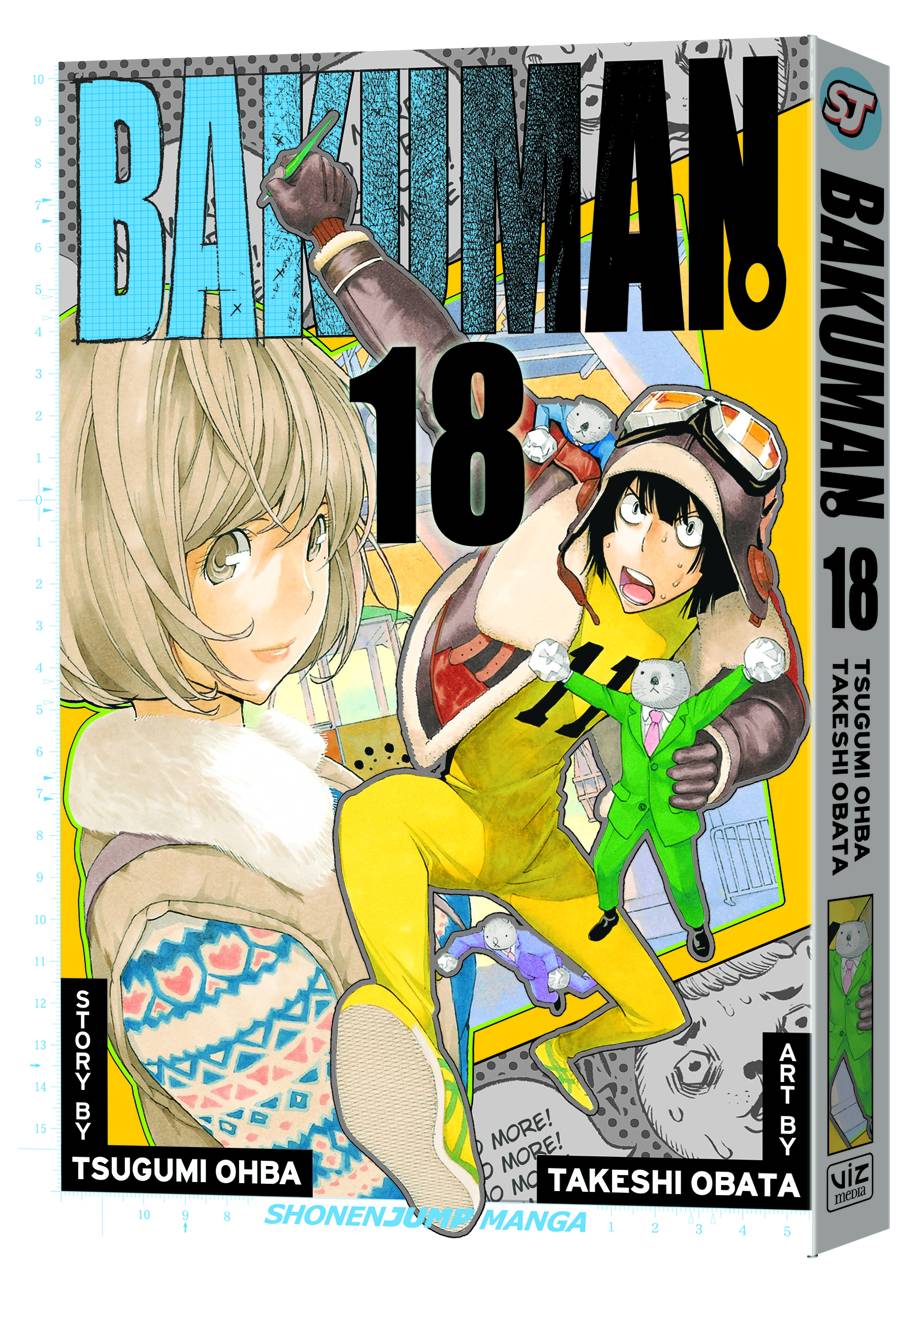 Bakuman Manga Volume 18